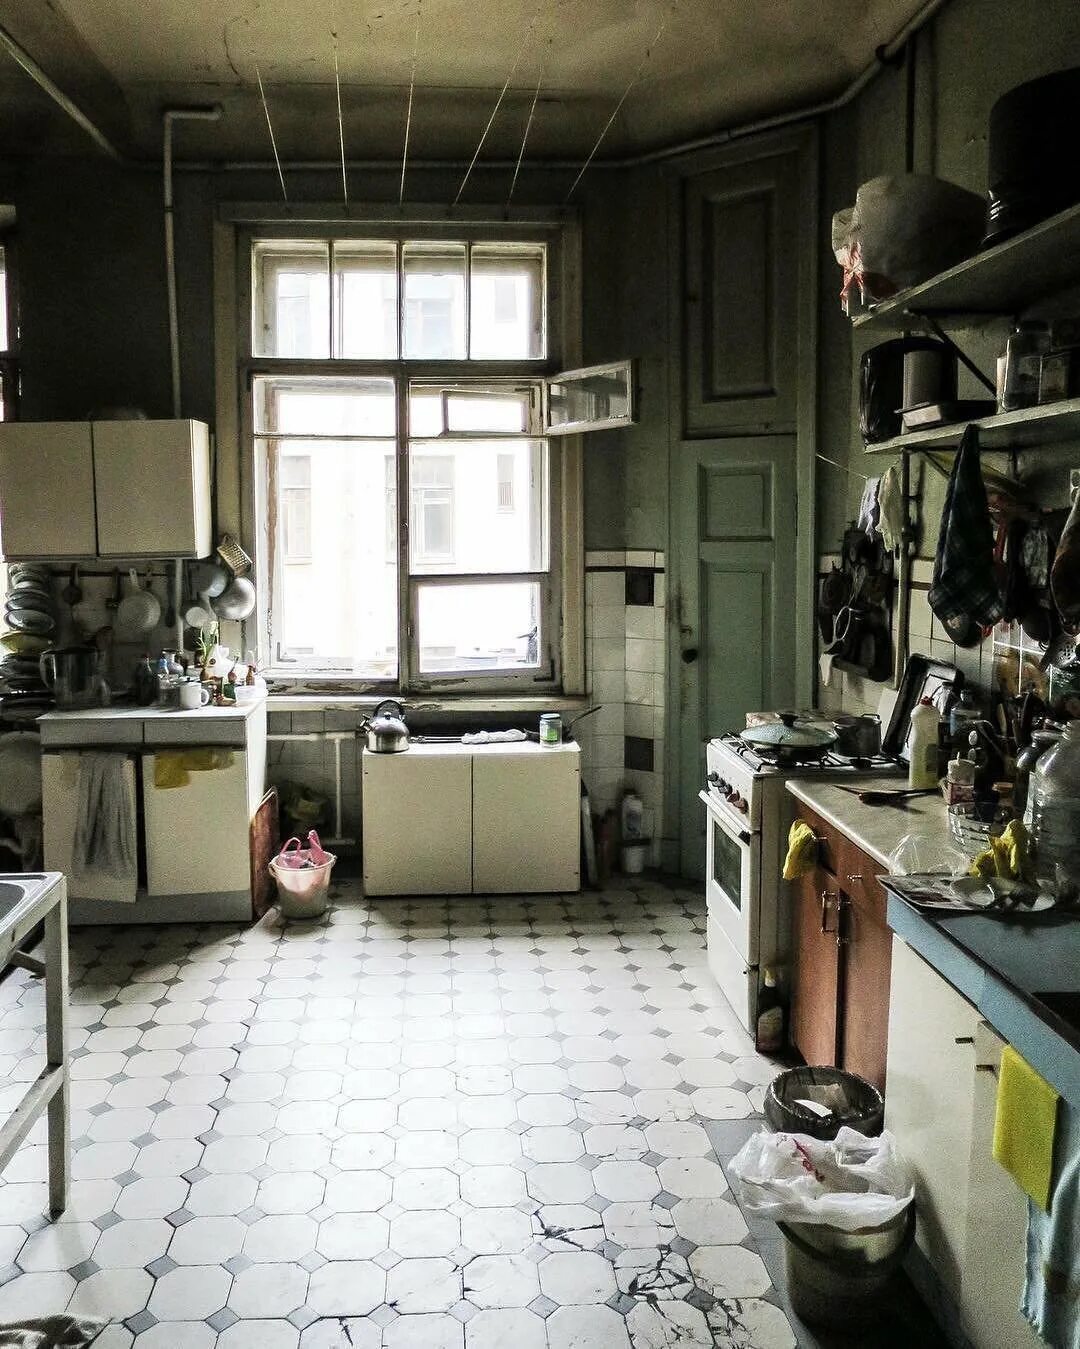 Аренда коммуналки. Кухня в коммуналке. Кухня в старой квартире. Кухня коммуналки интерьер. Советская кухня.